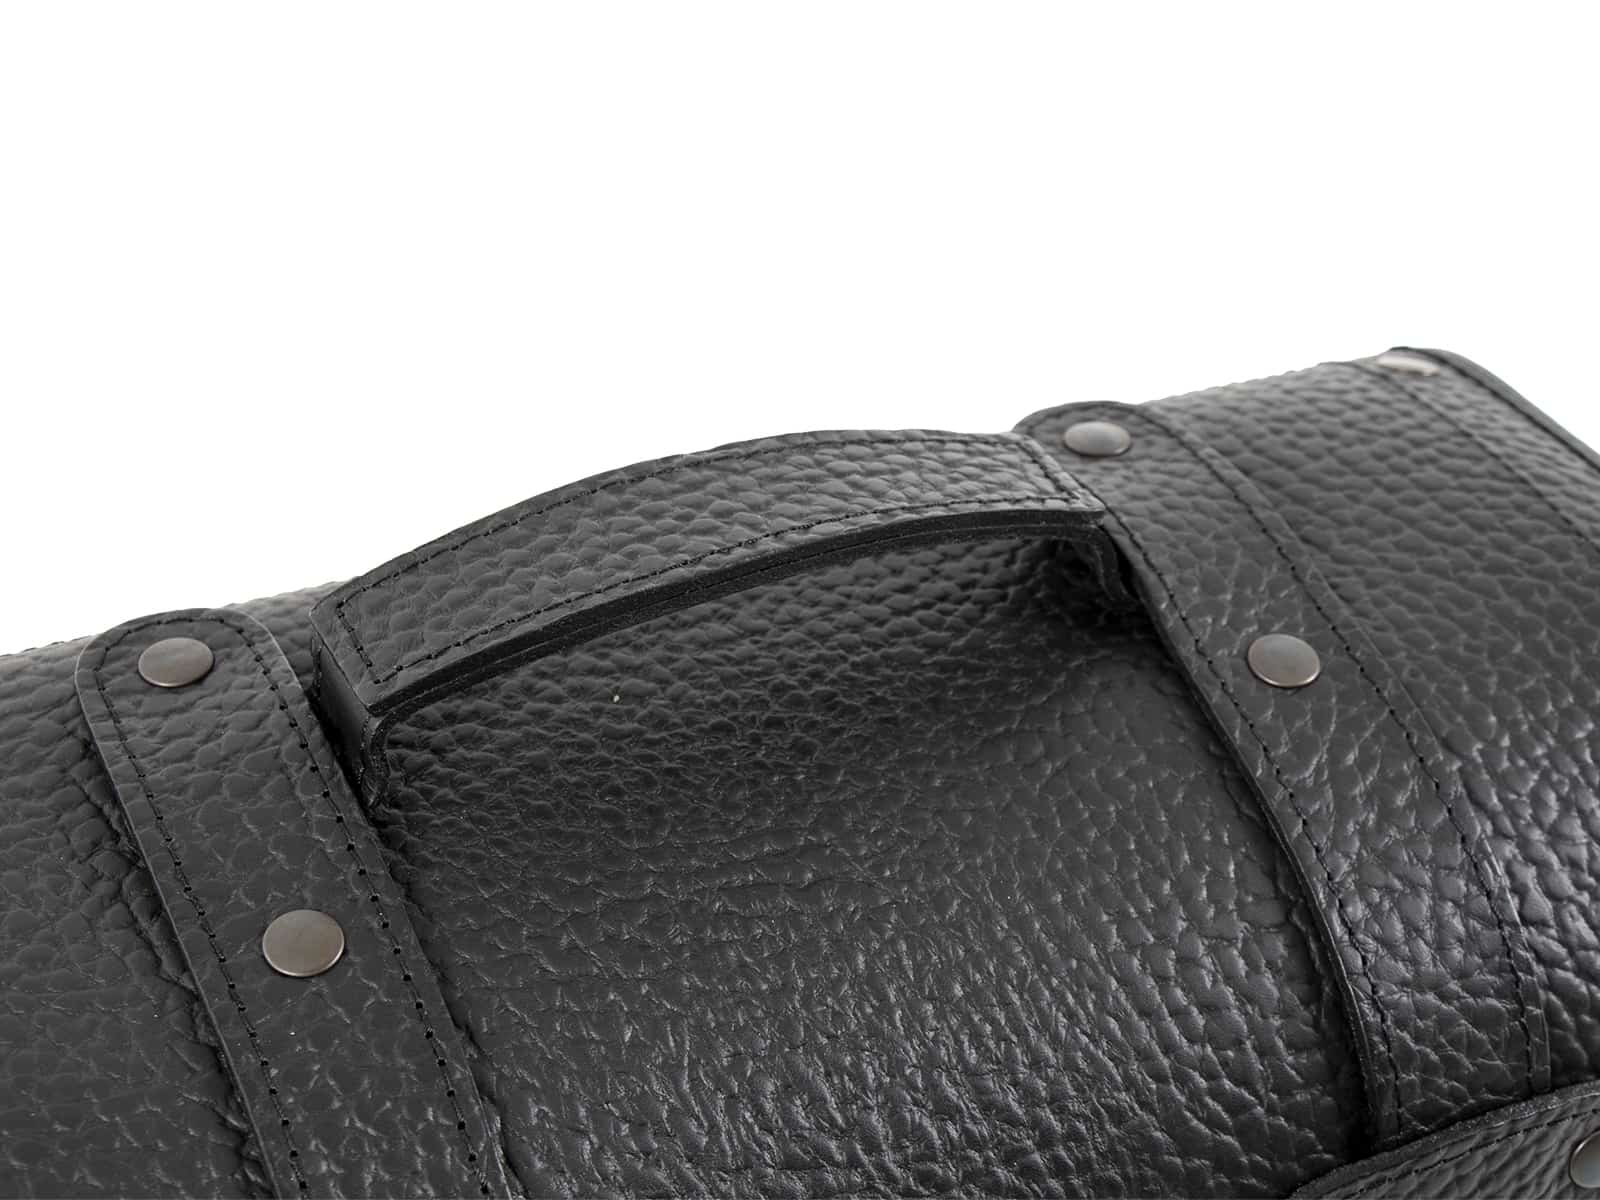 Liberty Big leather bag set for C-Bow holder